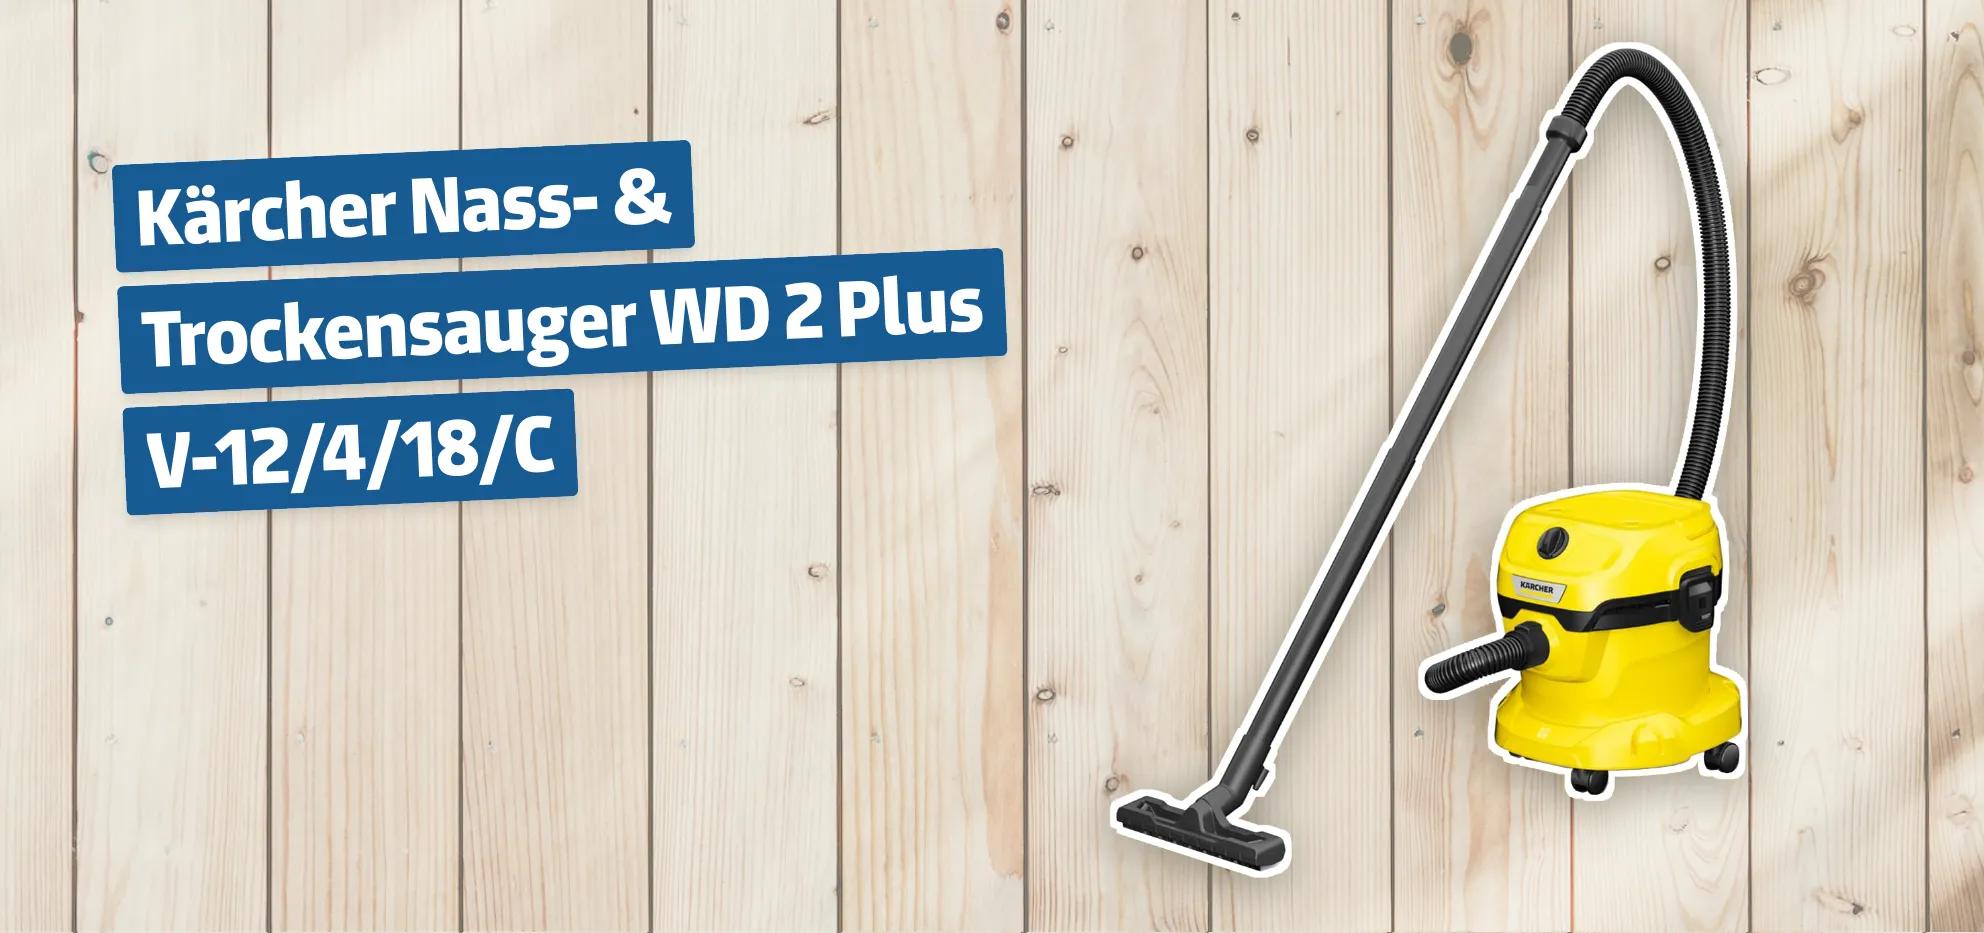 Kärcher Nass- & Trockensauger WD 2 Plus V-12/4/18/C